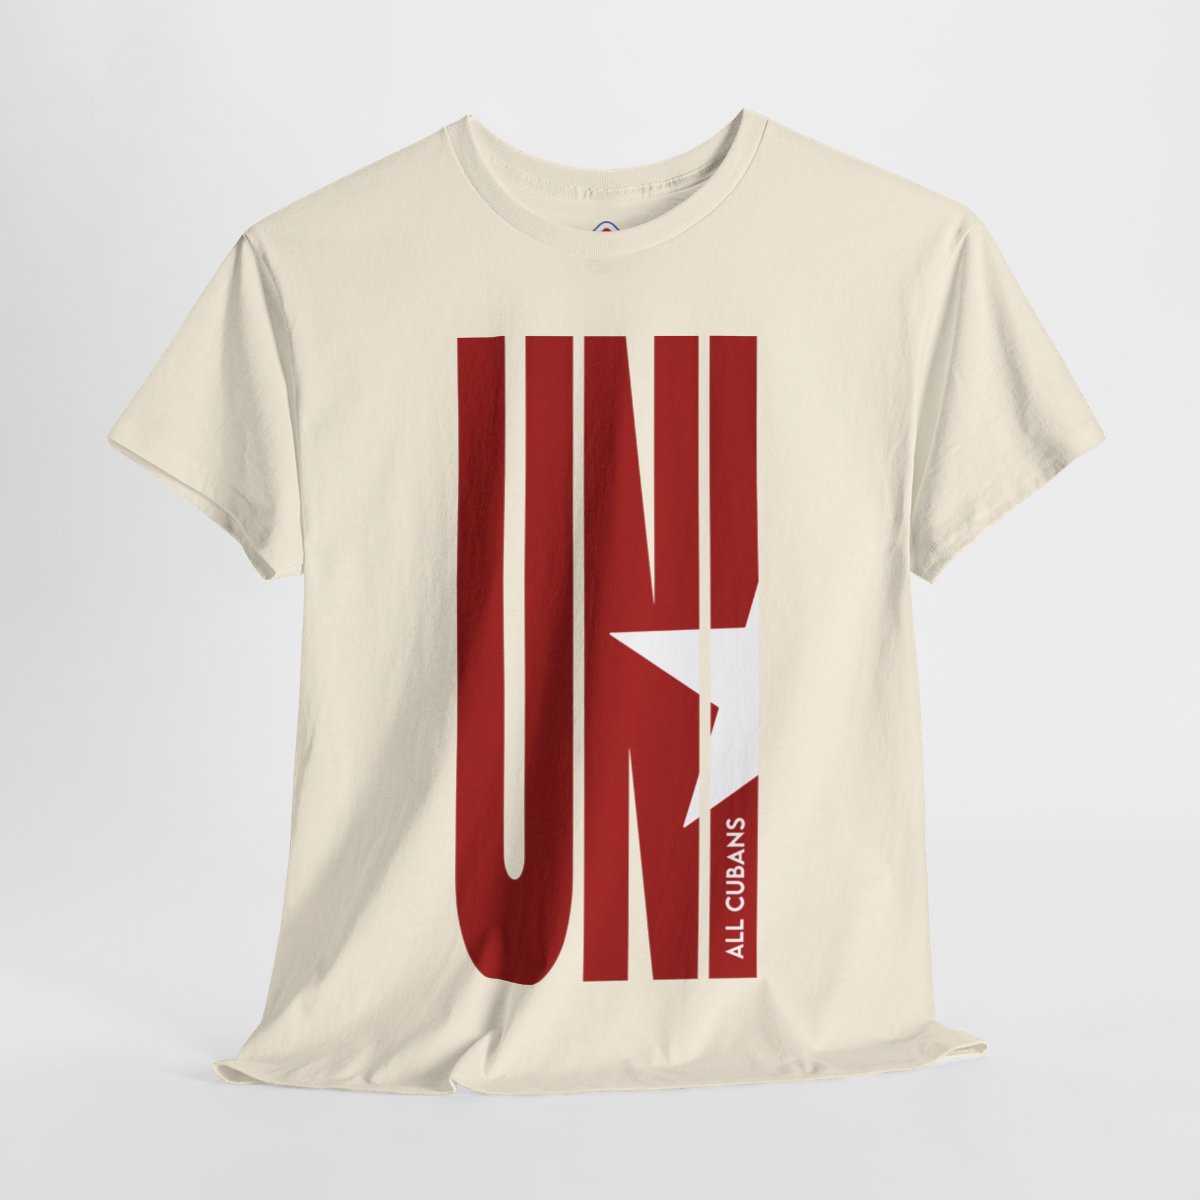 UNI-TED®. Colección UNITED®| Unisex